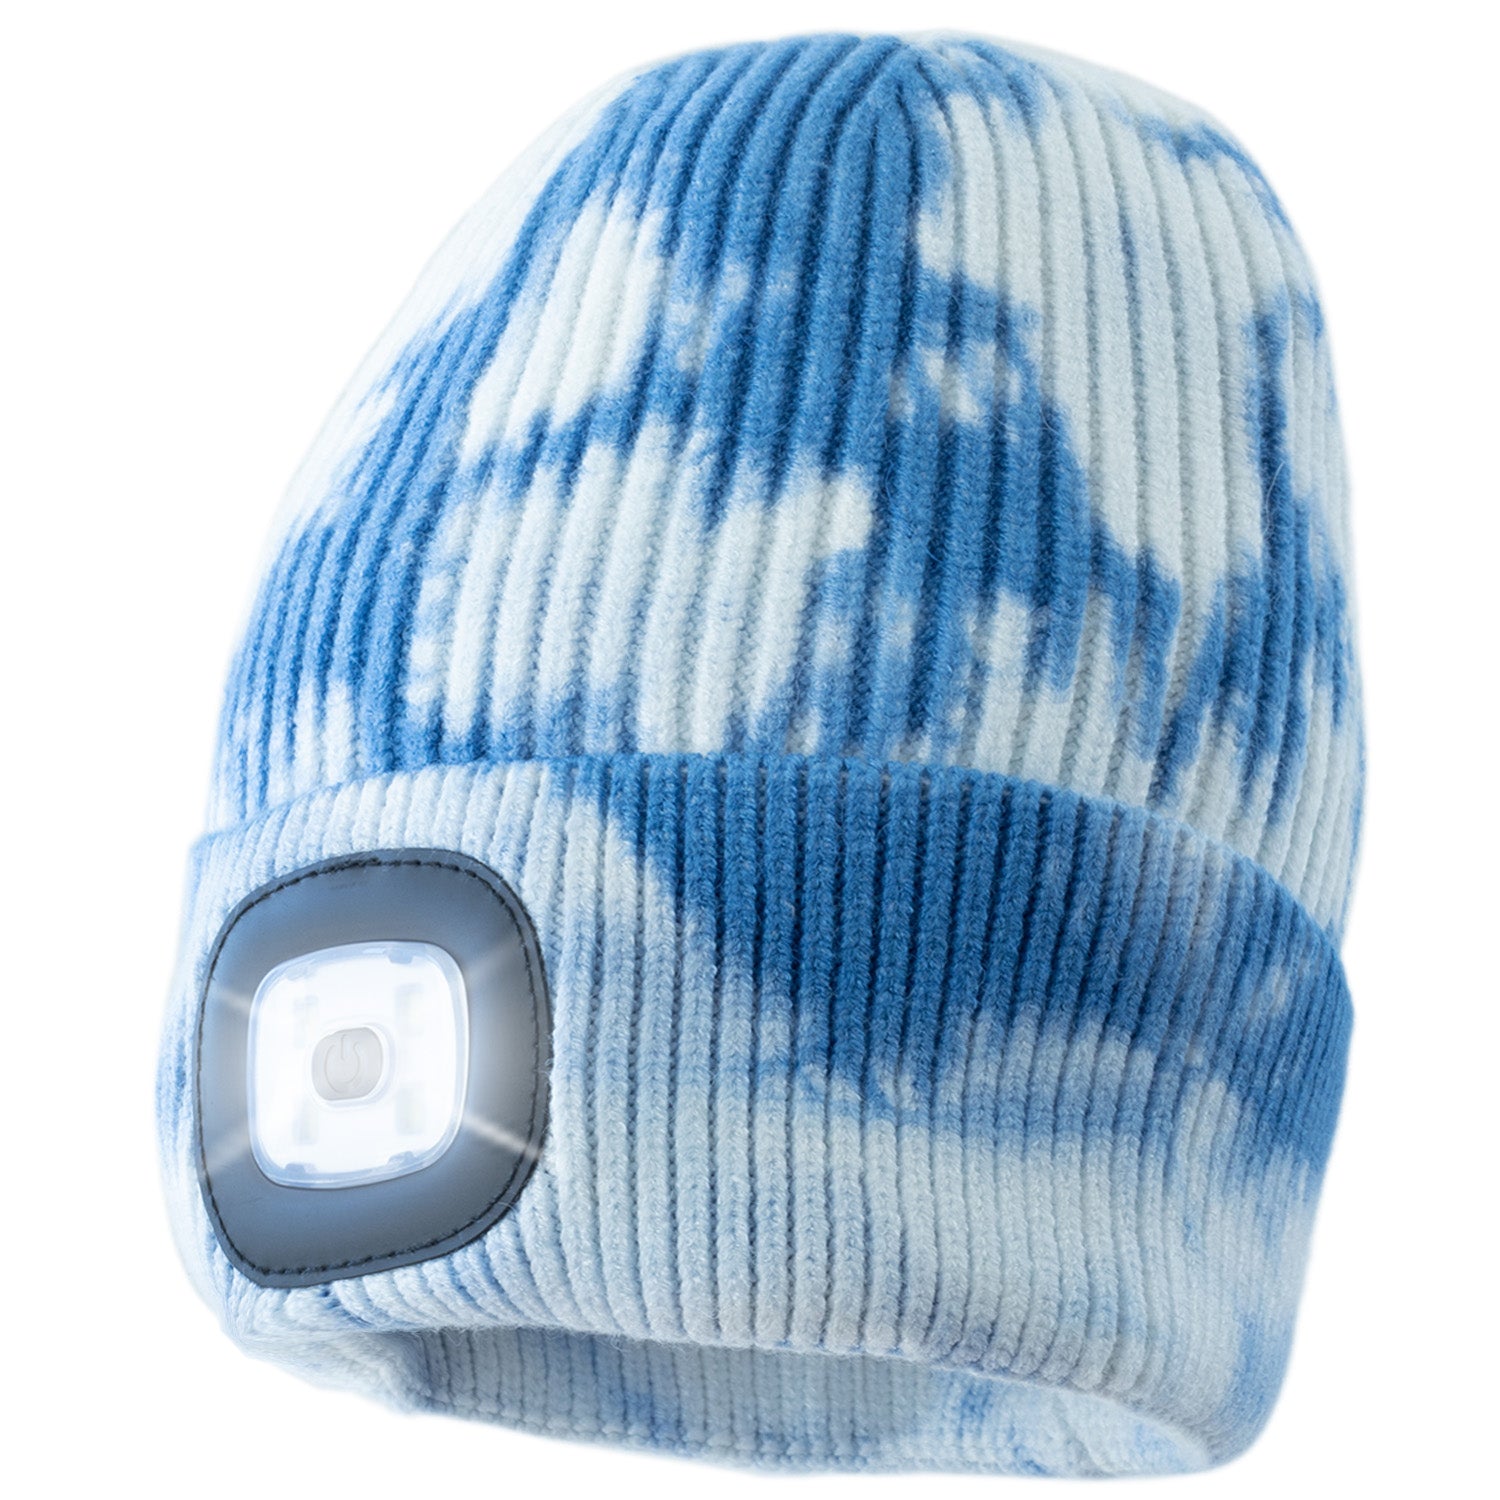 Headlightz® Beanie Blue Innovation Roq Knit Tie - Dye – 